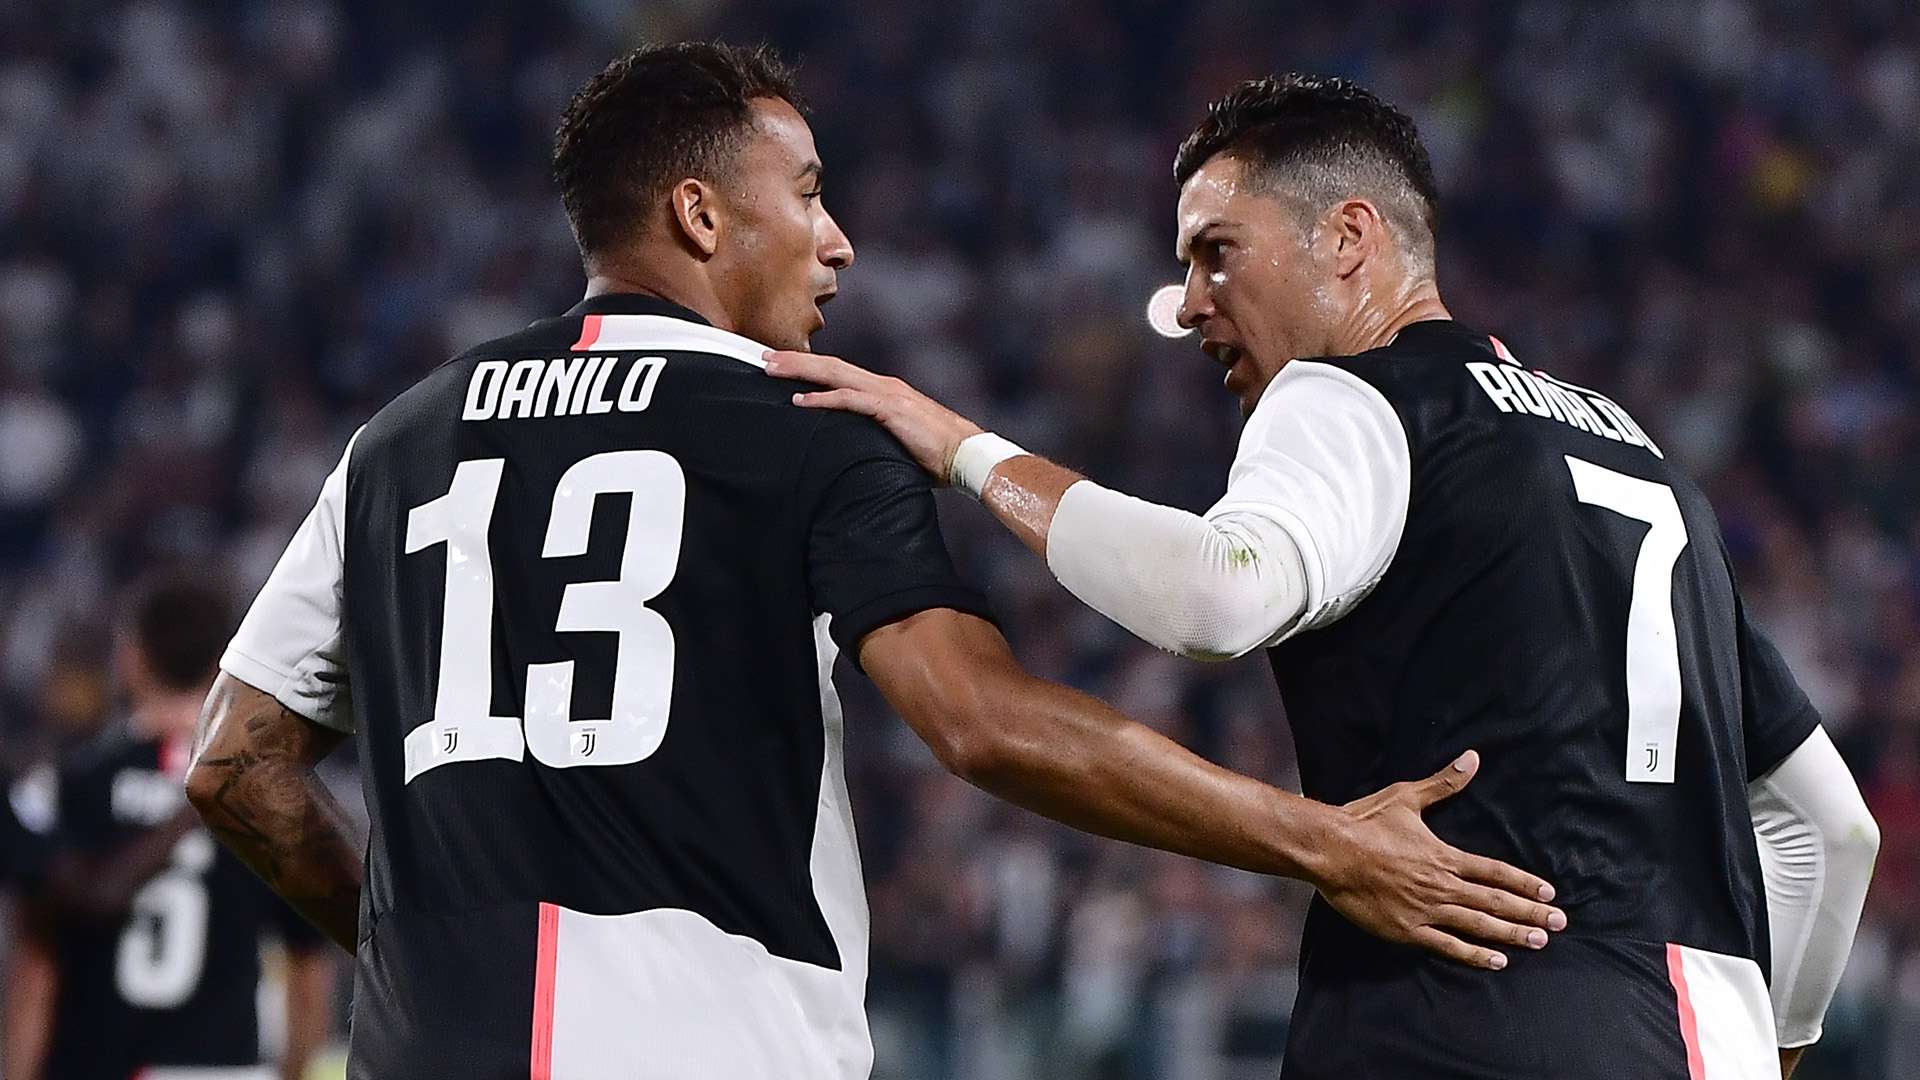 Danilo Cristiano Ronaldo Juventus Serie A 2019